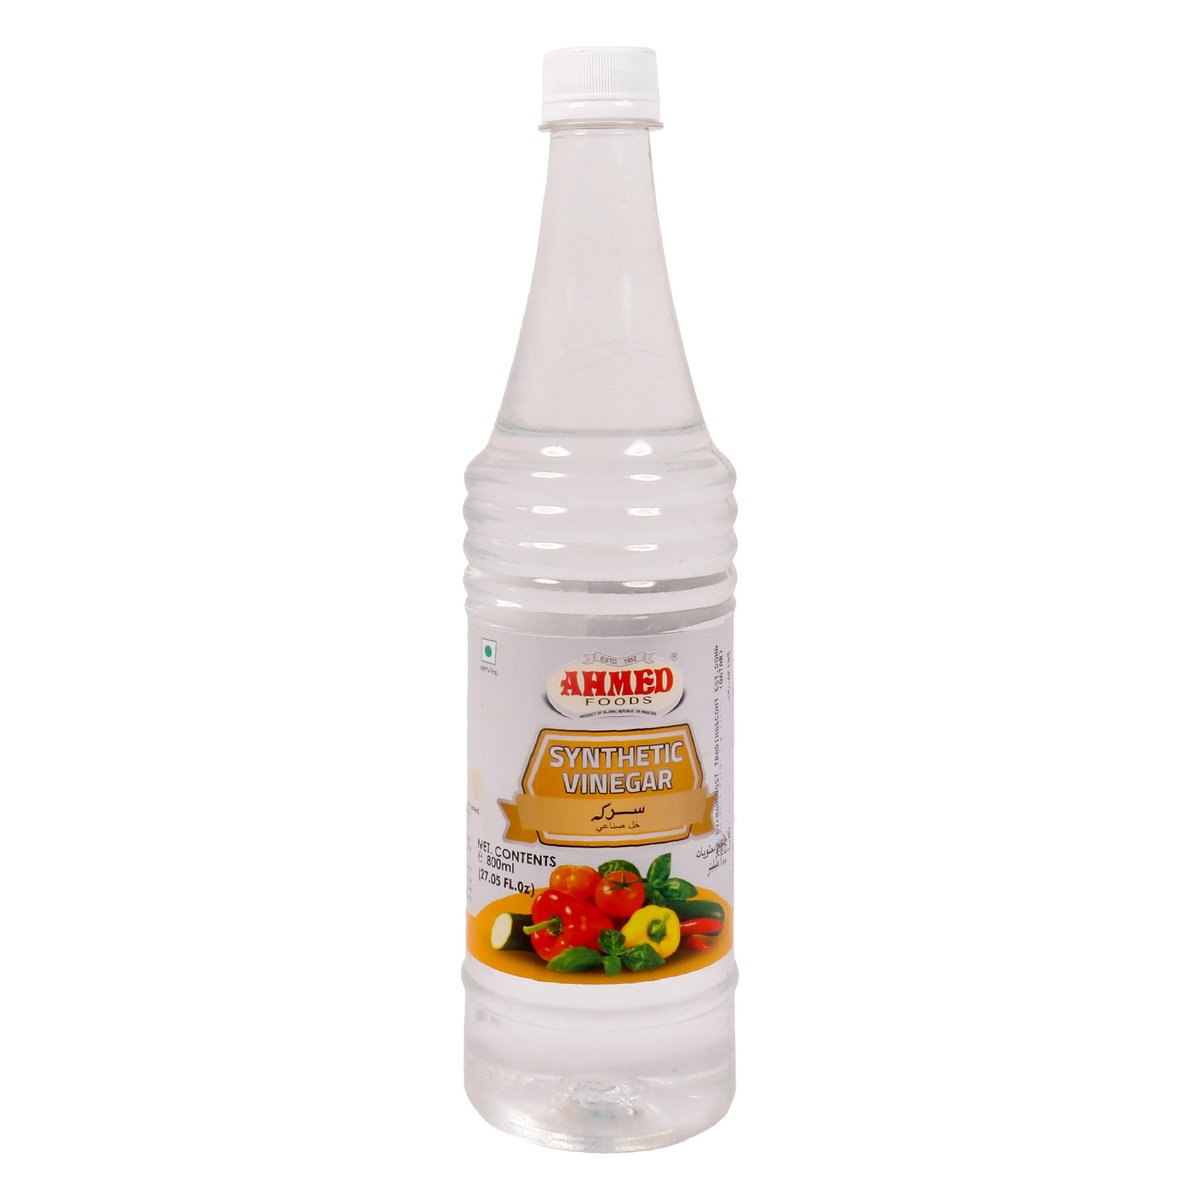 Ahmed Synthetic Vinegar 800ml